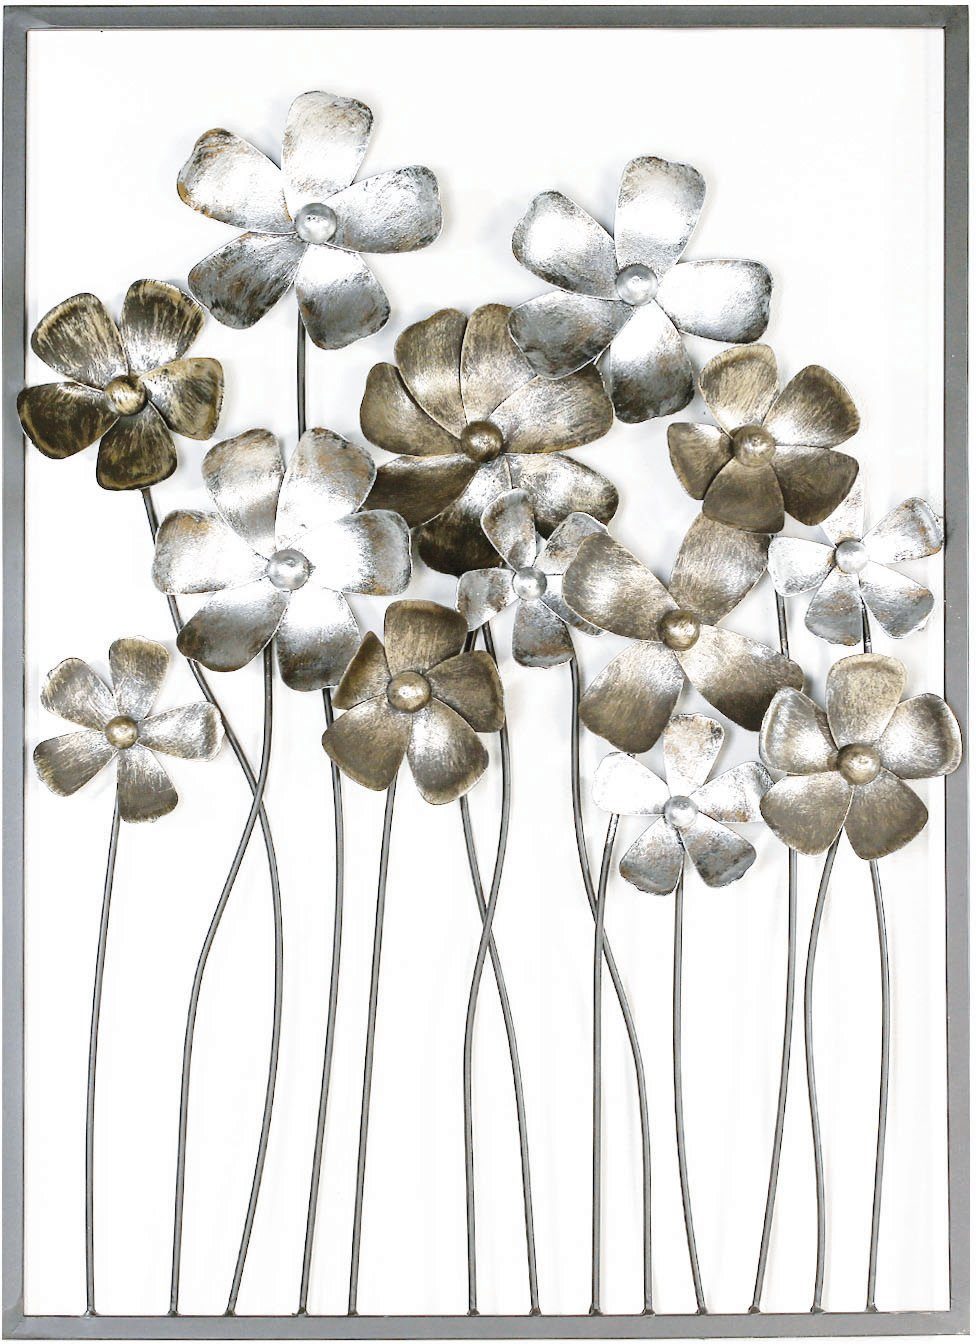 GILDE Wanddekoobjekt Wandrelief Fleurs, braun/champagnerfarben St), braun, champagnerfarben, (1 im Esszimmer dekorativ Blumen, Wohnzimmer, Farbe: Metall, aus Wanddeko, & farben